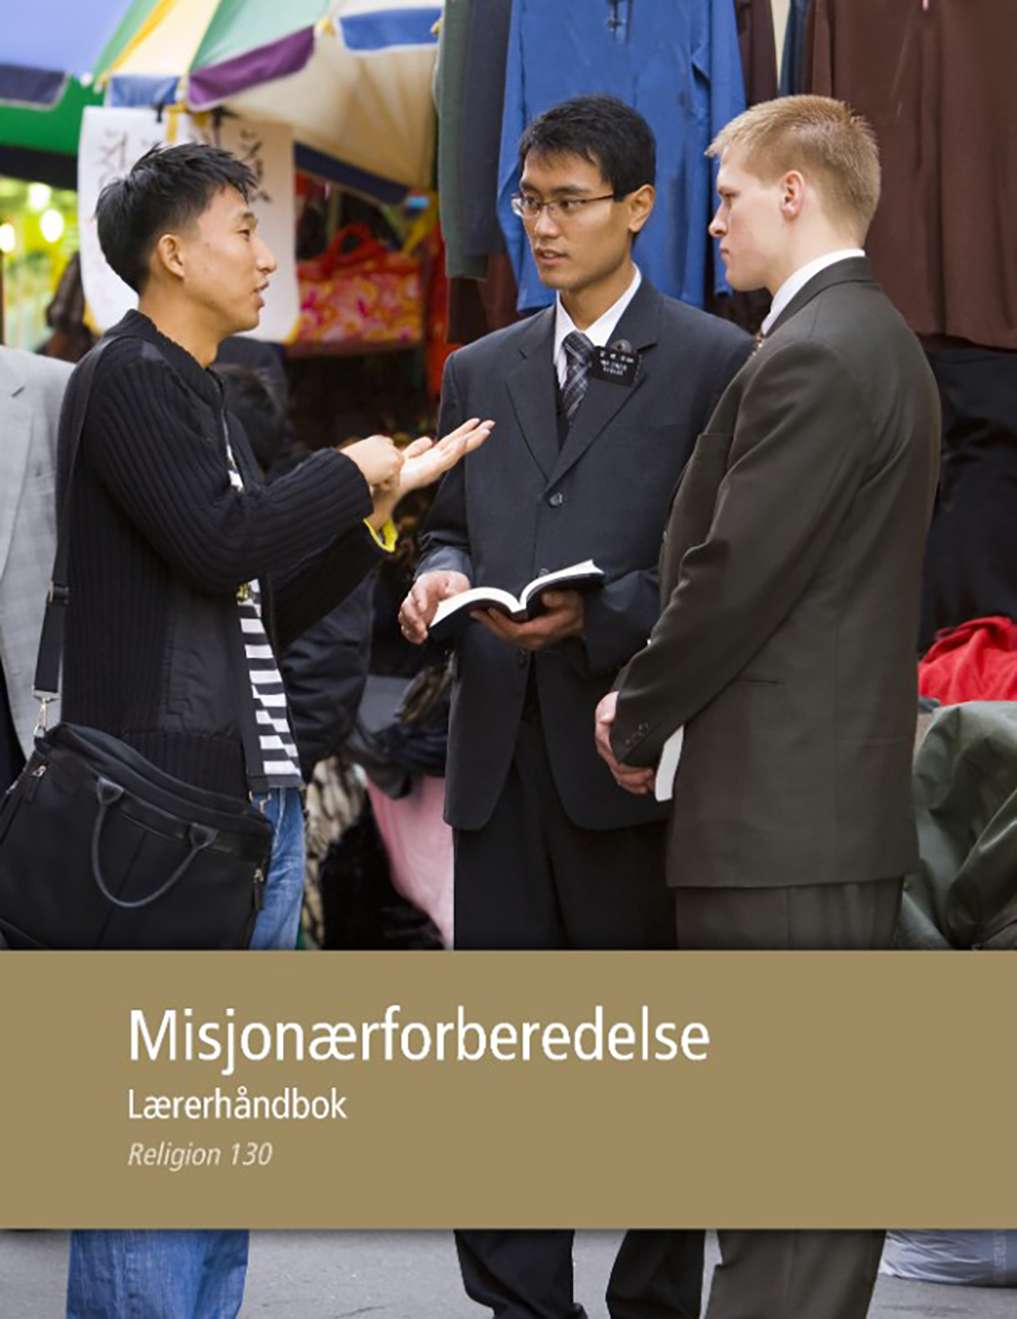 Misjonærforberedelse – Lærerhåndbok (Religion 130)